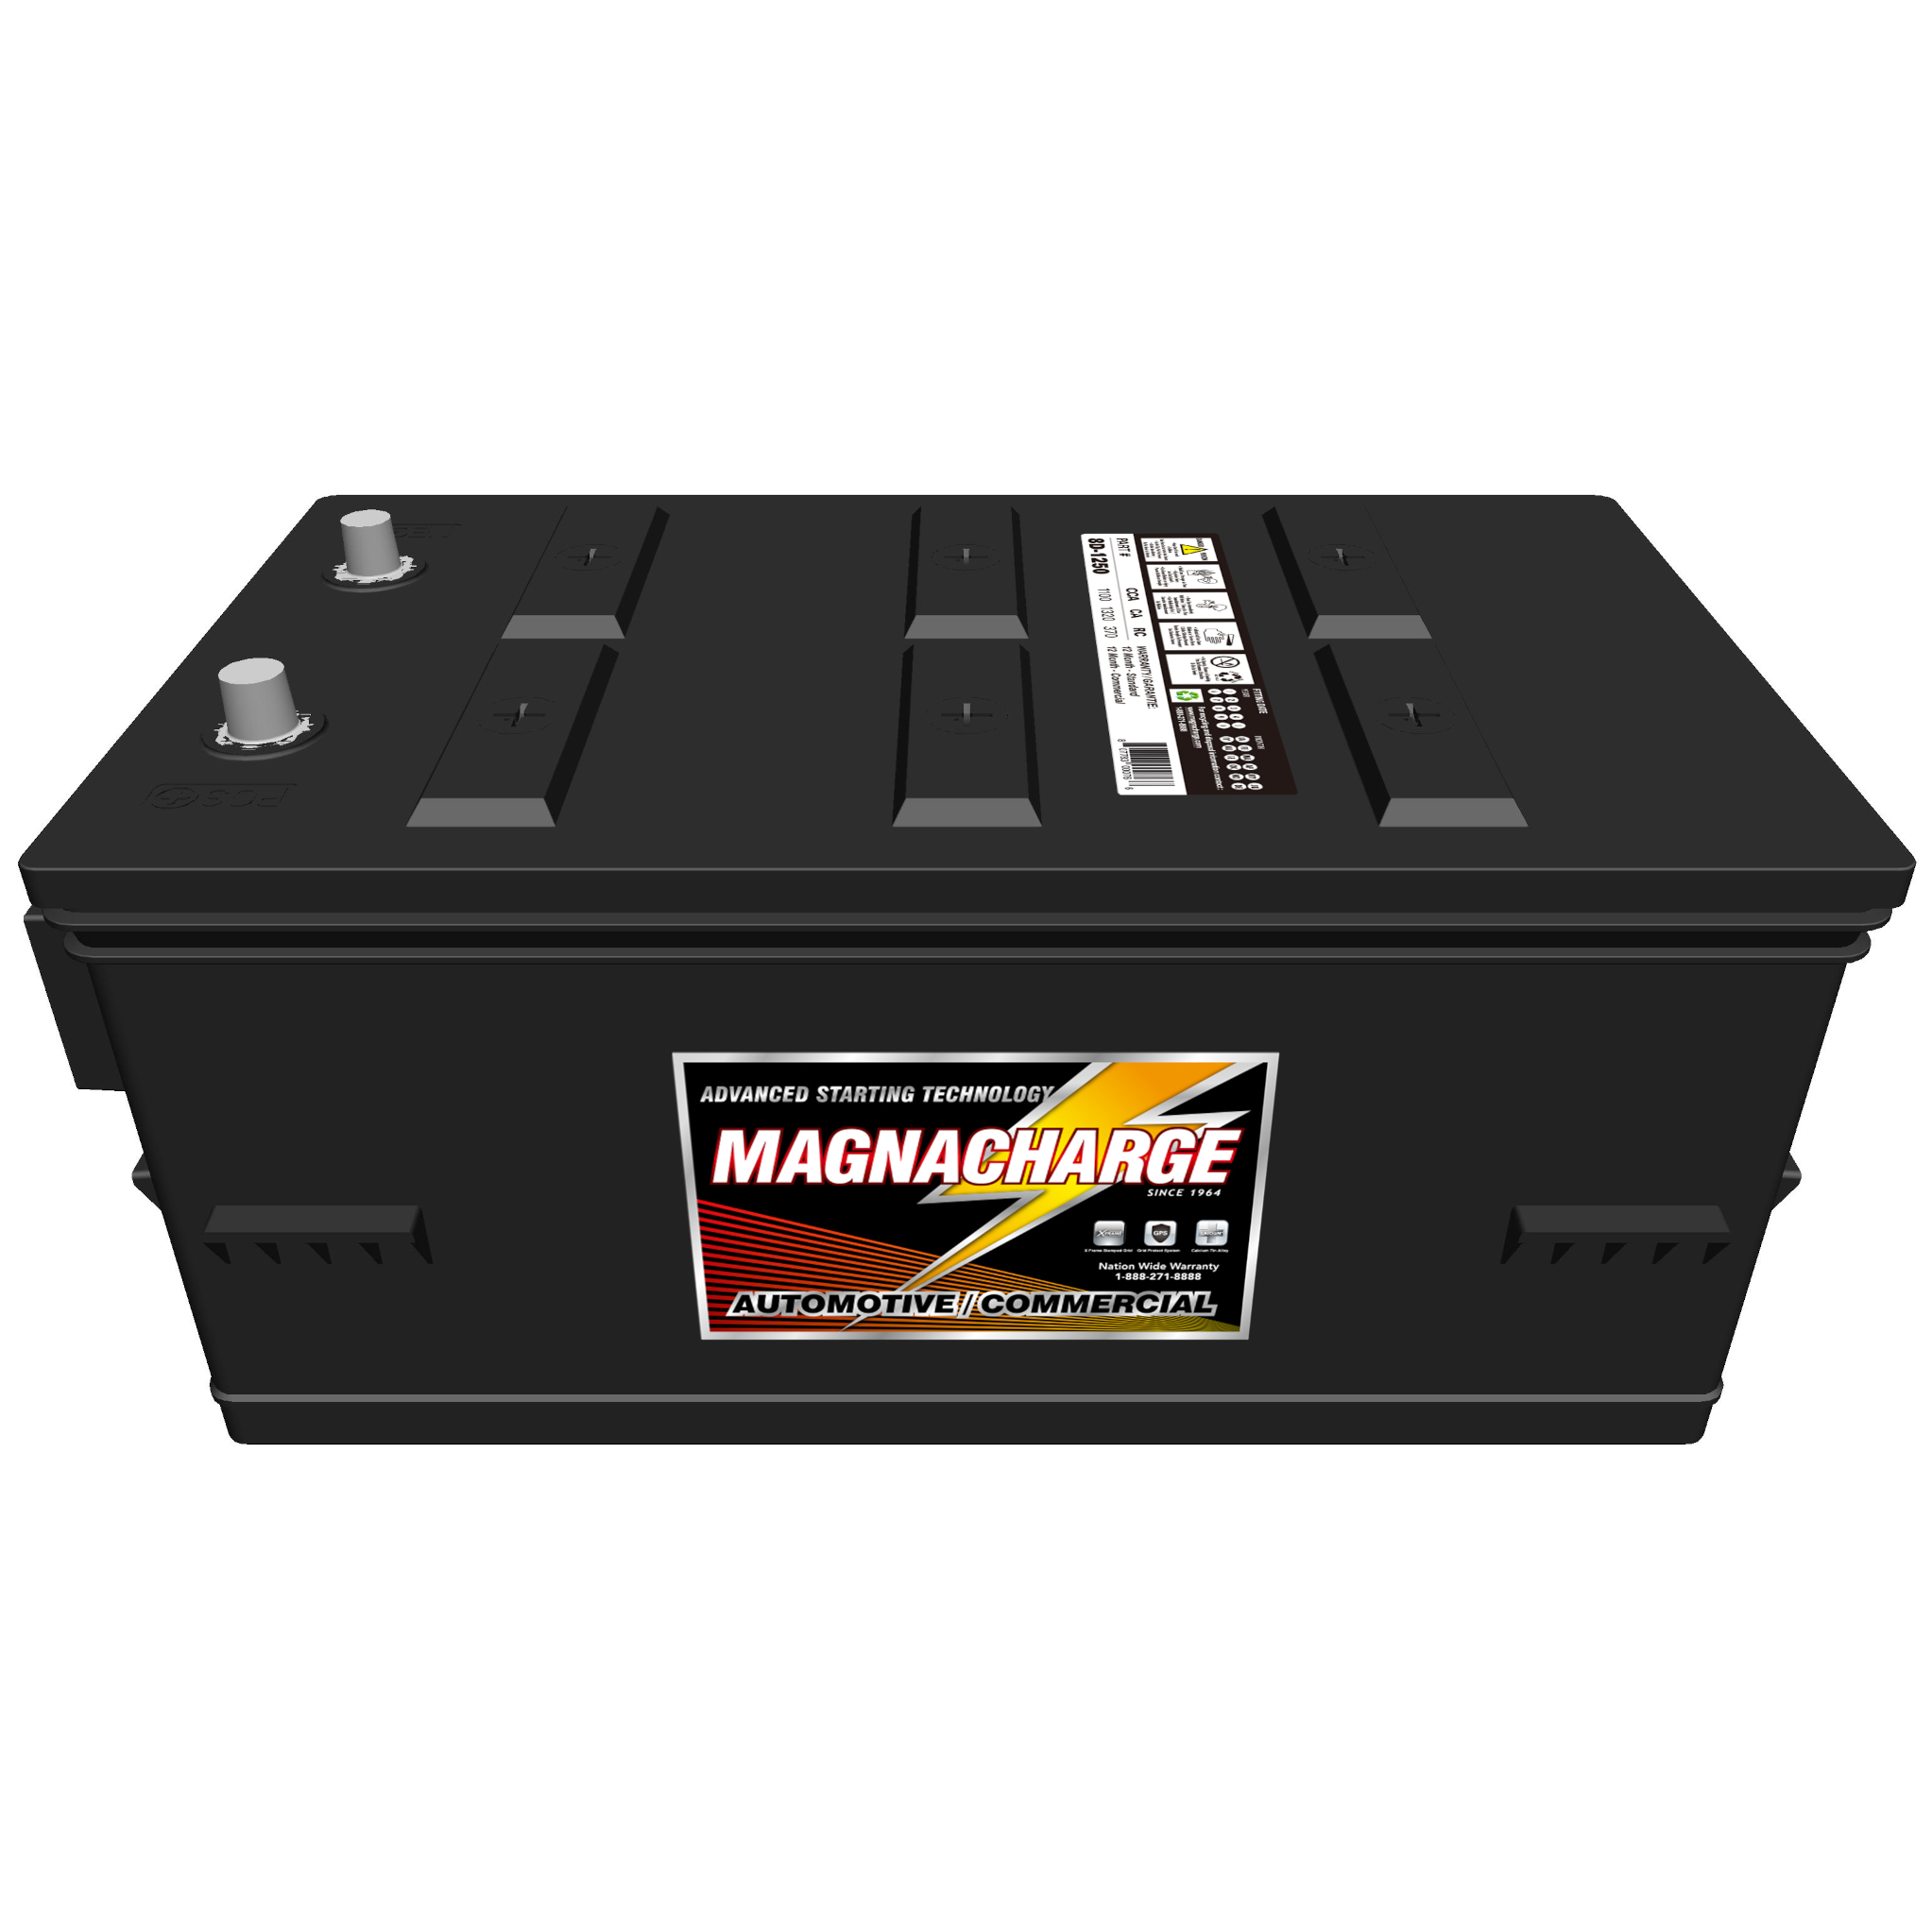 Magnacharge 8D-1250 Group 8D Truck Battery